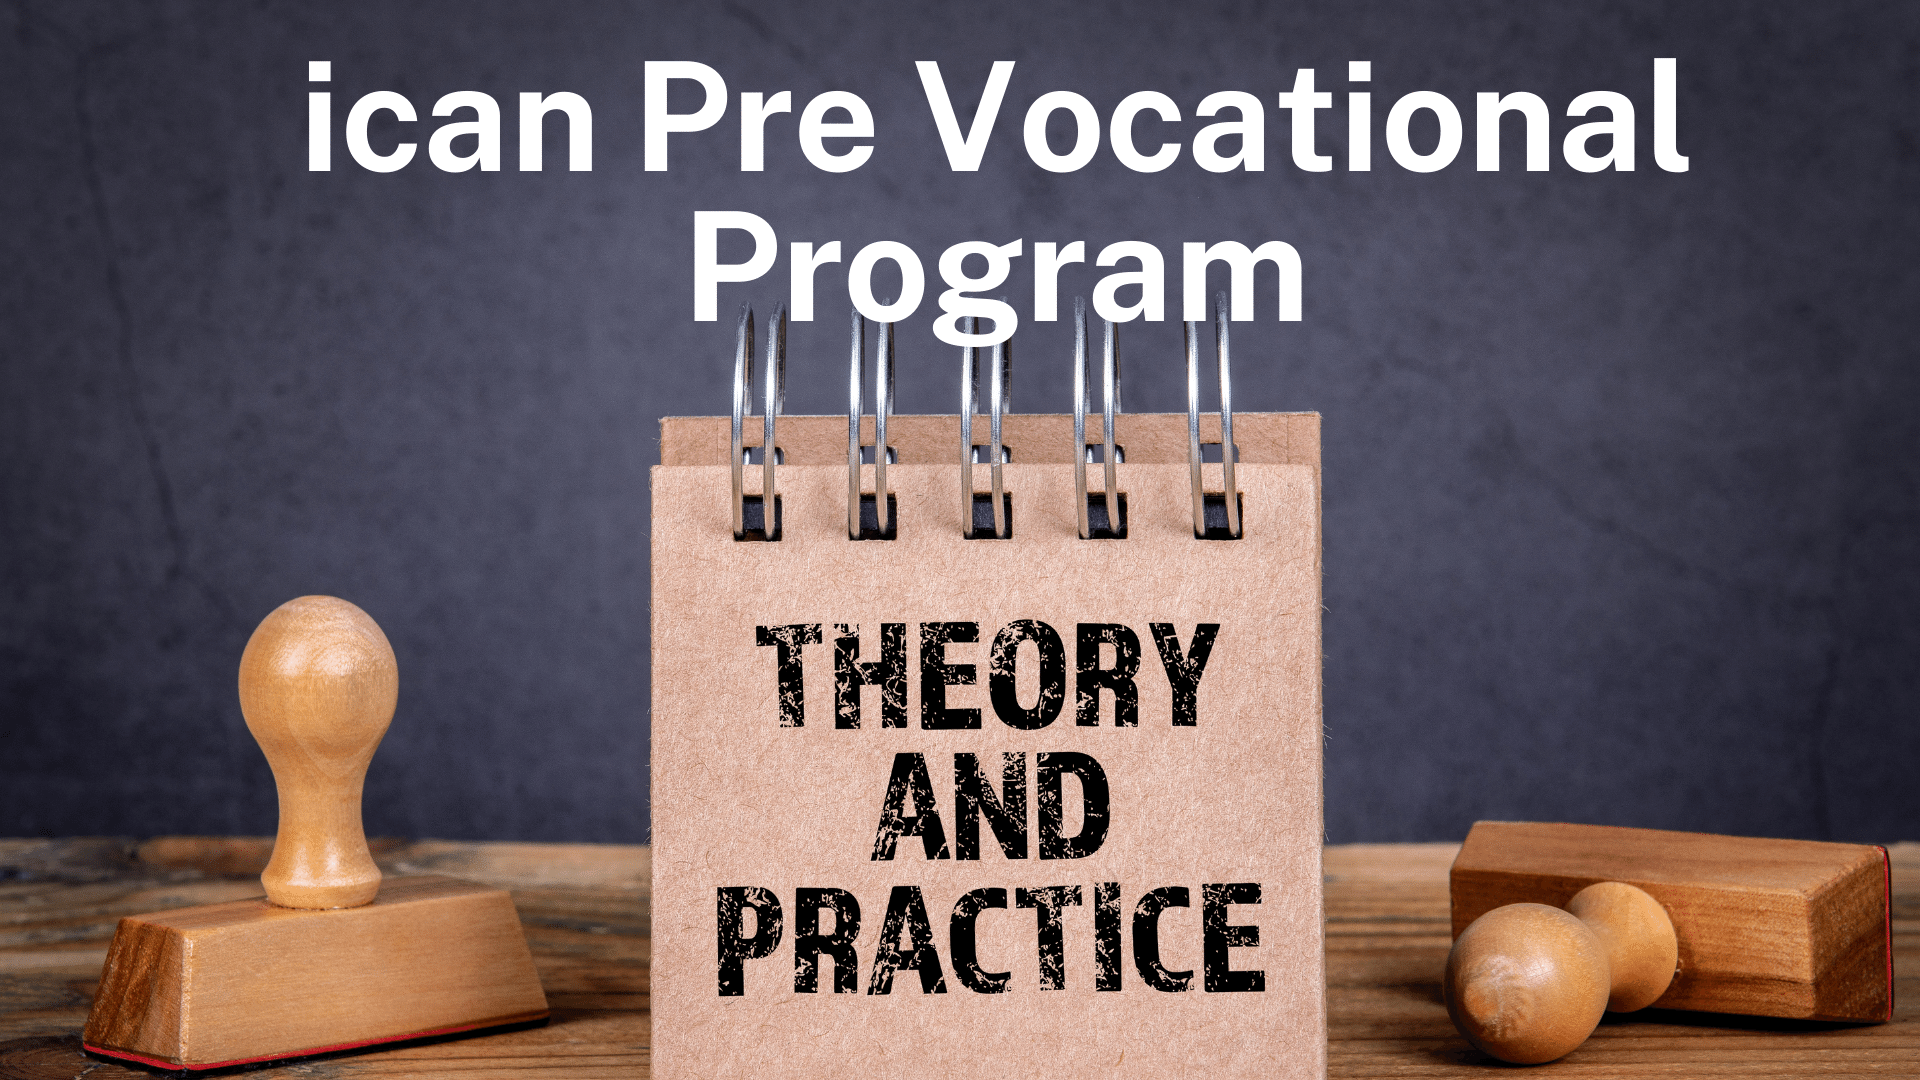 ican pre vocational Program